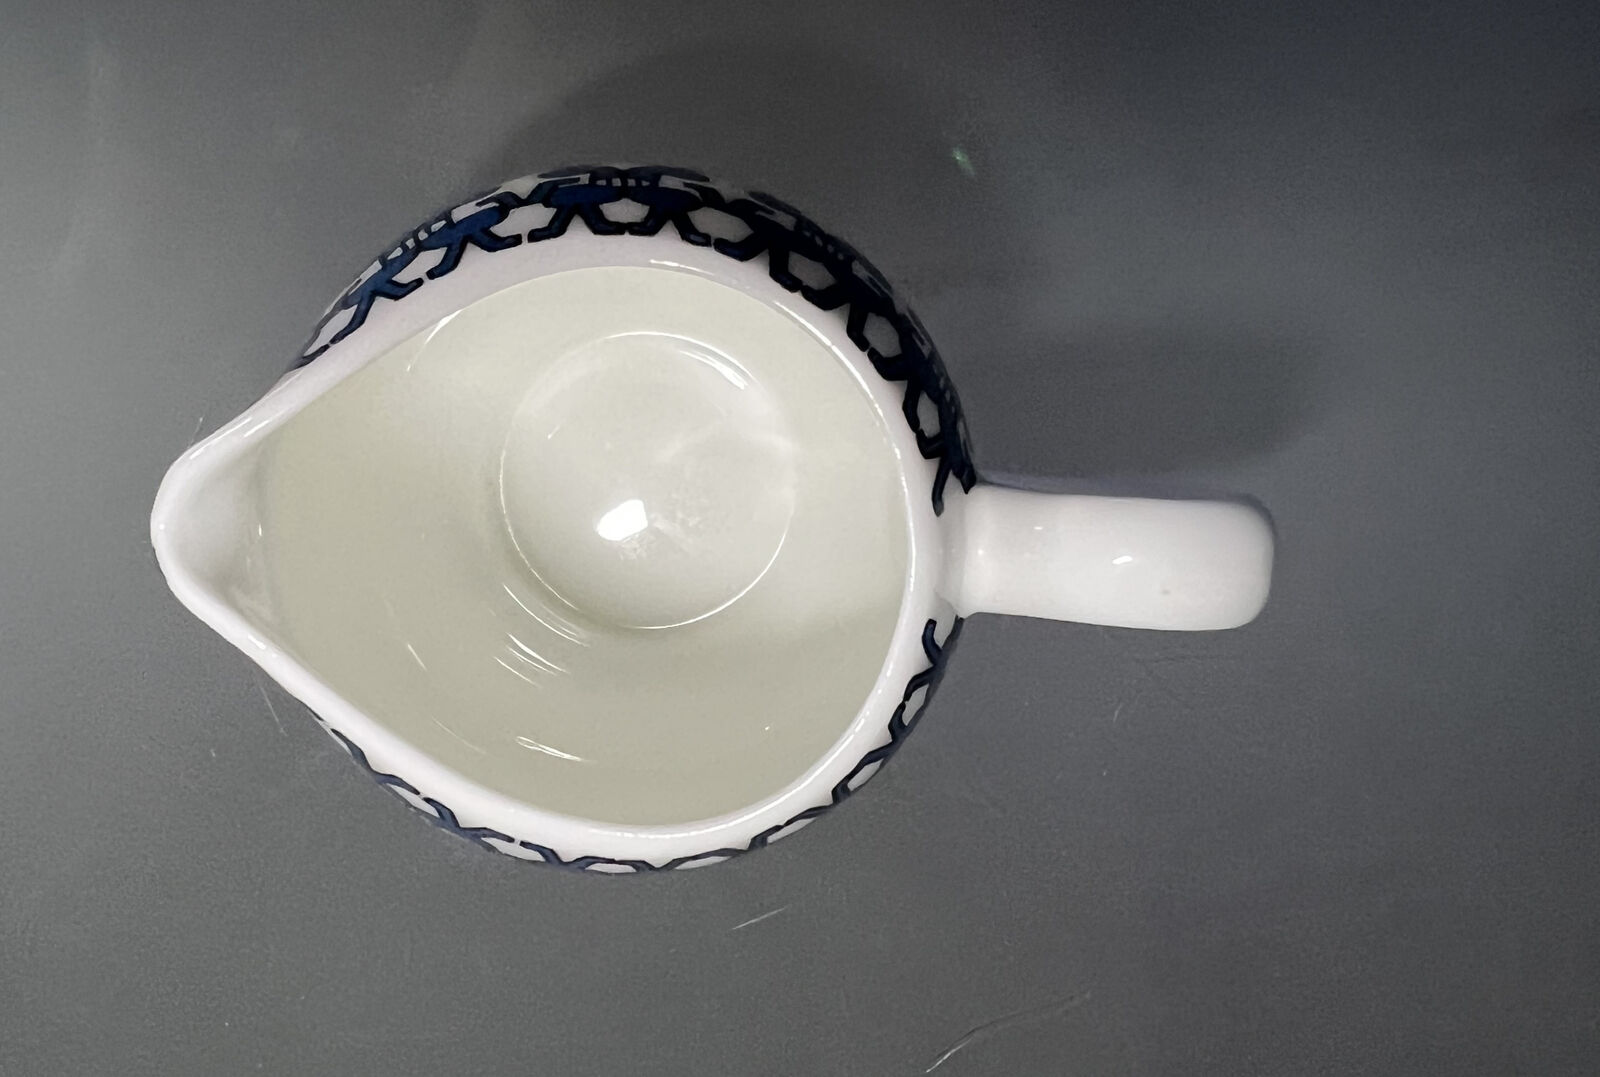 Gustavsberg Margret Milk Jar / Sauce Jar by Margareta M Hennix